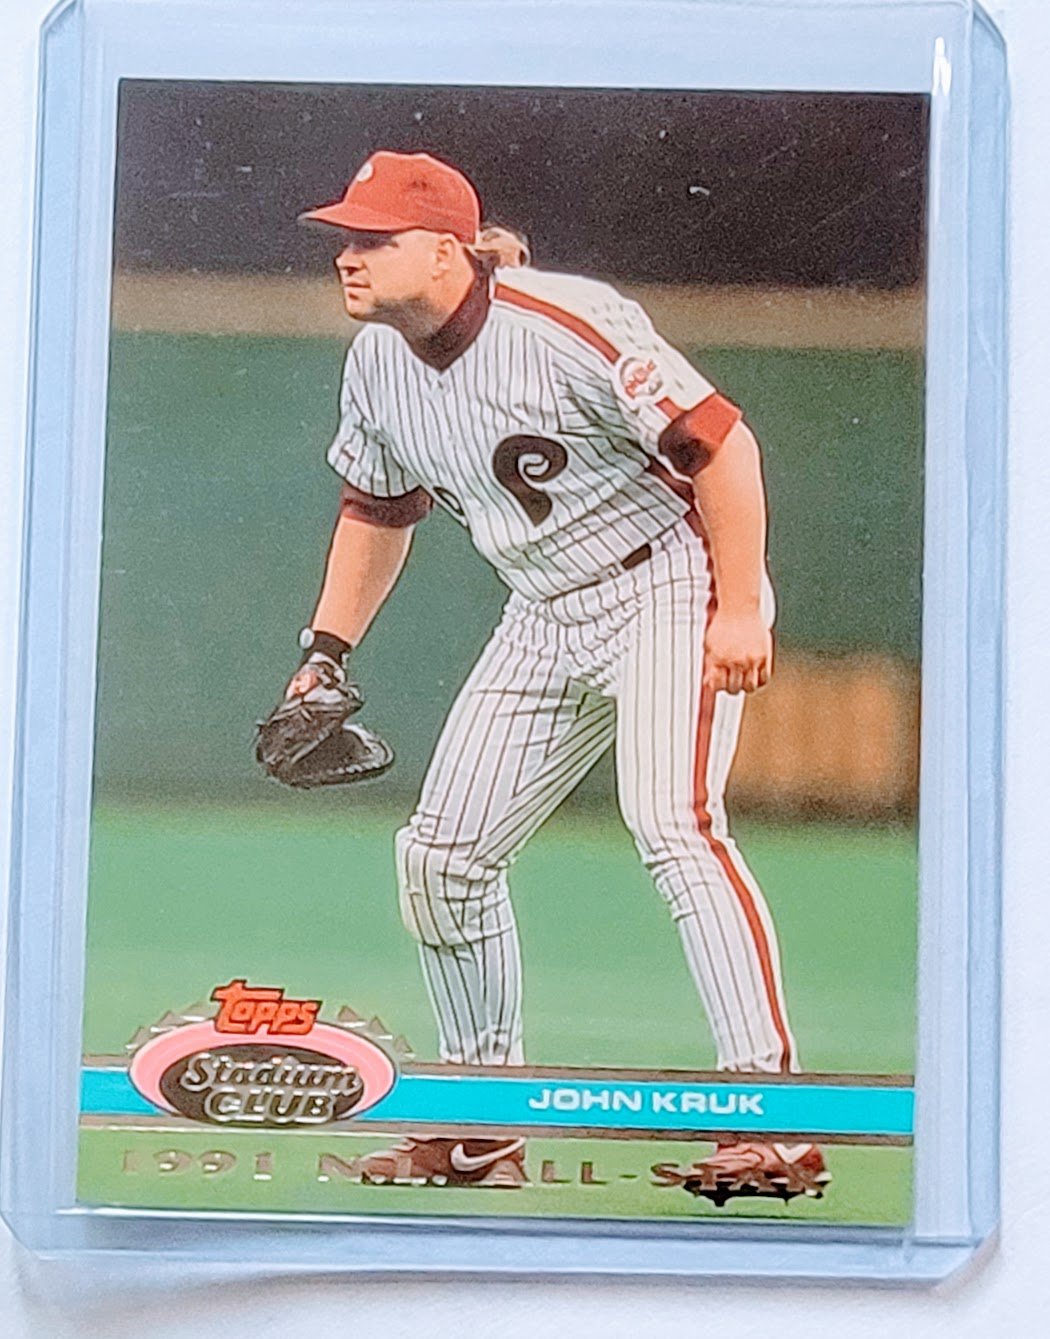 1992 Topps Stadium Club Dome John Kruk 1991 All Star MLB Baseball Trading Card TPTV simple Xclusive Collectibles   